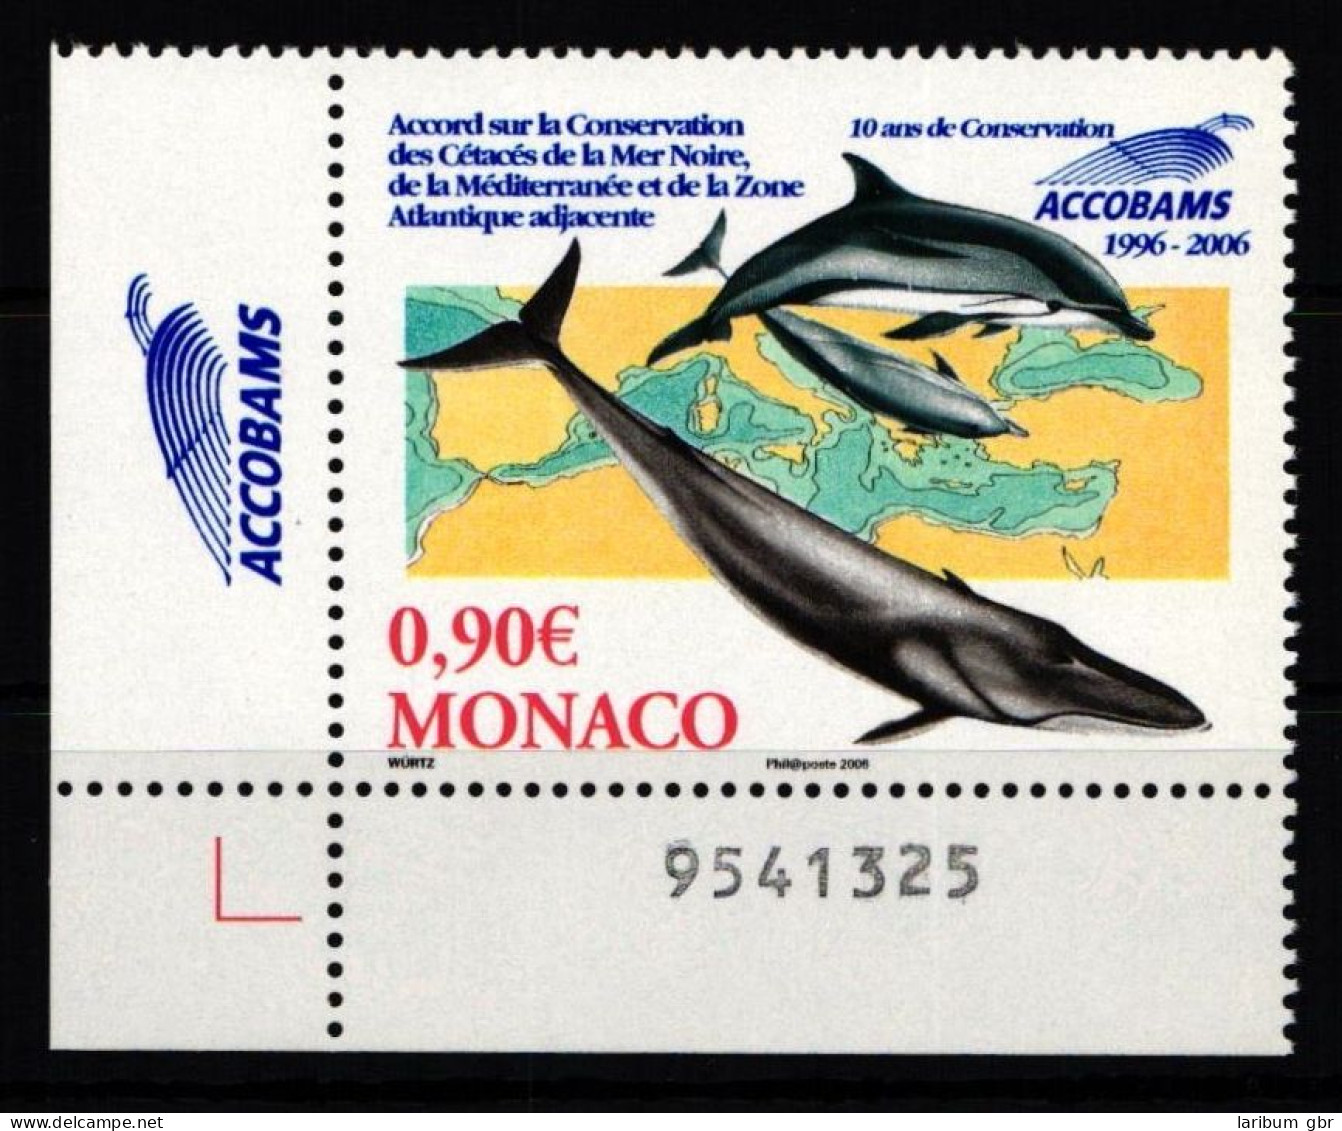 Monaco 2810 Postfrisch #KO995 - Marine Life